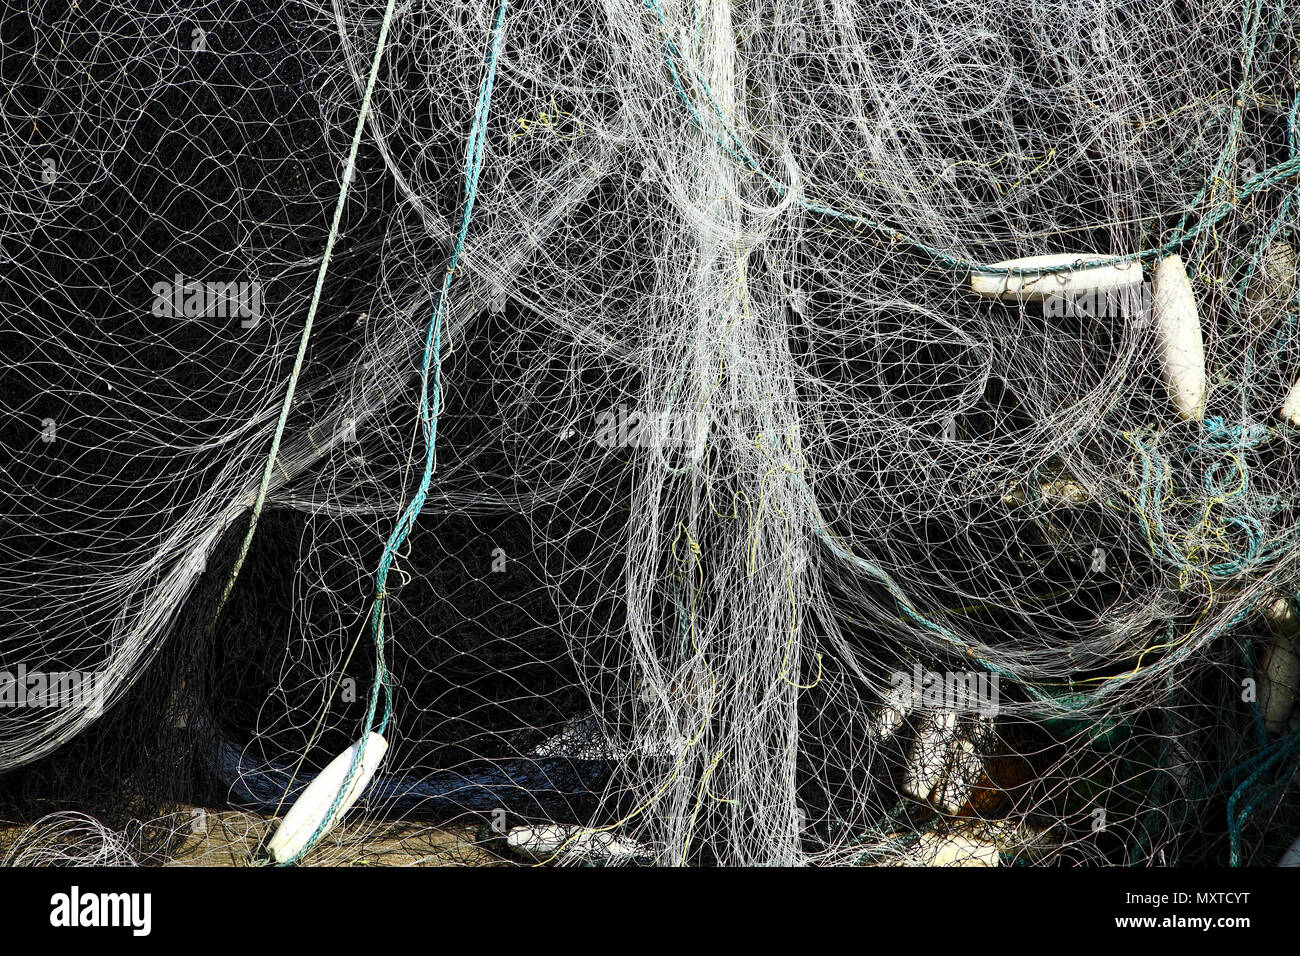 https://c8.alamy.com/comp/MXTCYT/sea-fishing-nets-drying-on-railings-at-the-coast-MXTCYT.jpg